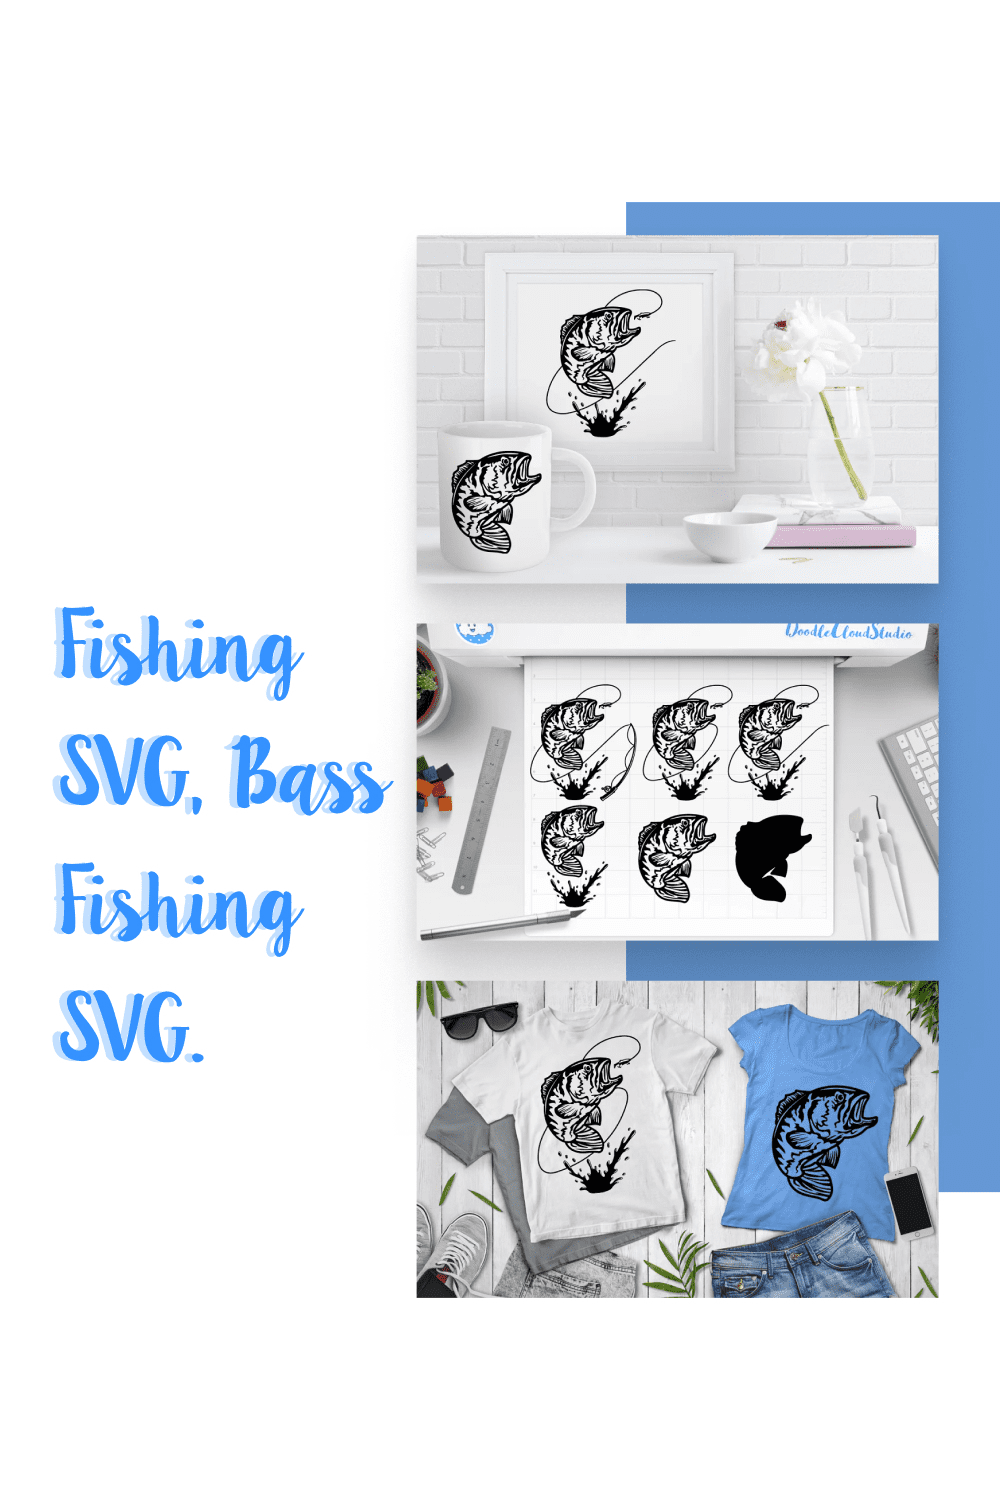 Fishing SVG, Bass Fishing SVG.